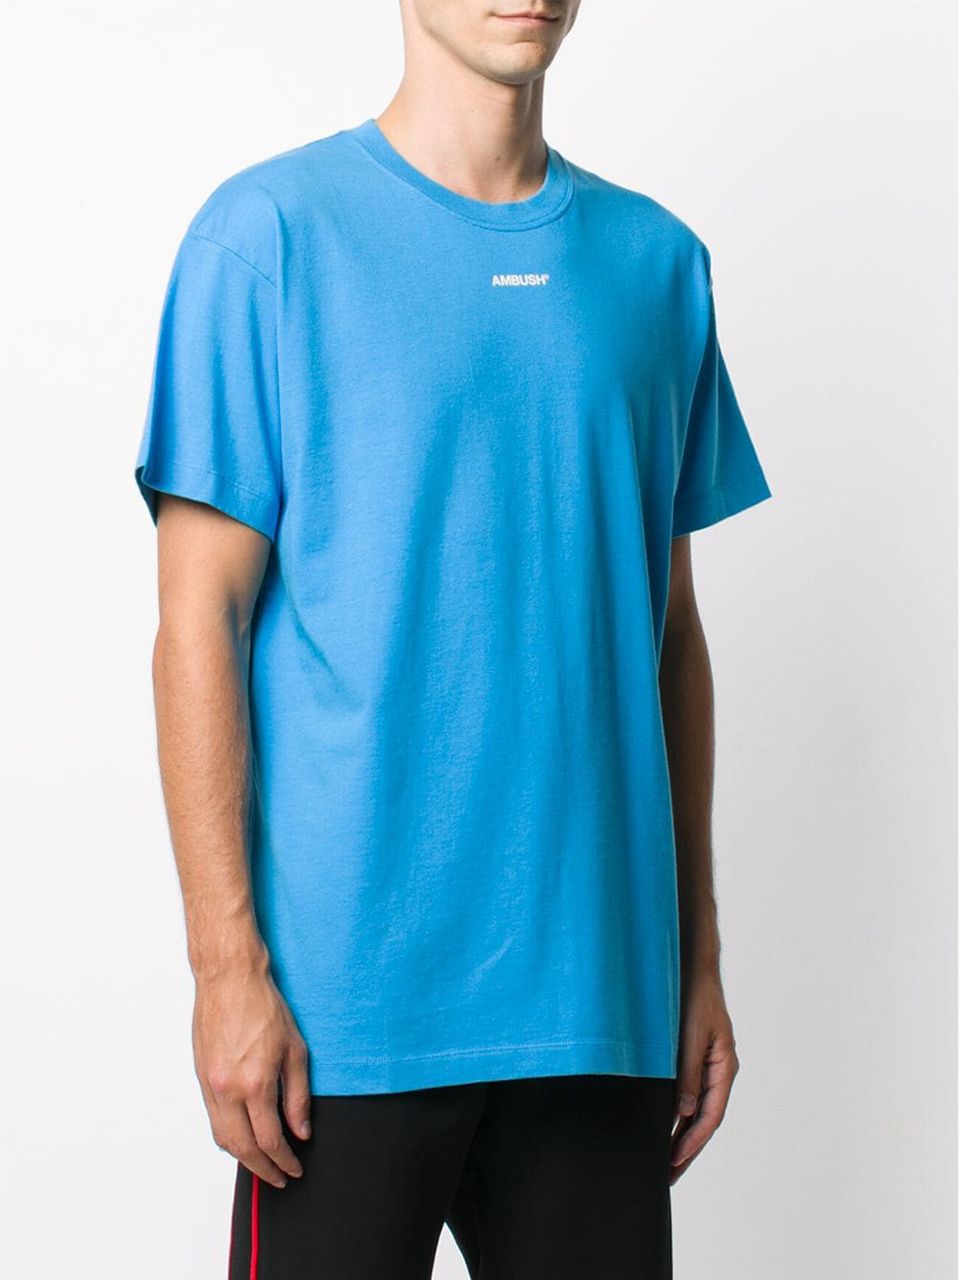 Imagem de: Camiseta AMBUSH Azul com Estampa Posterior